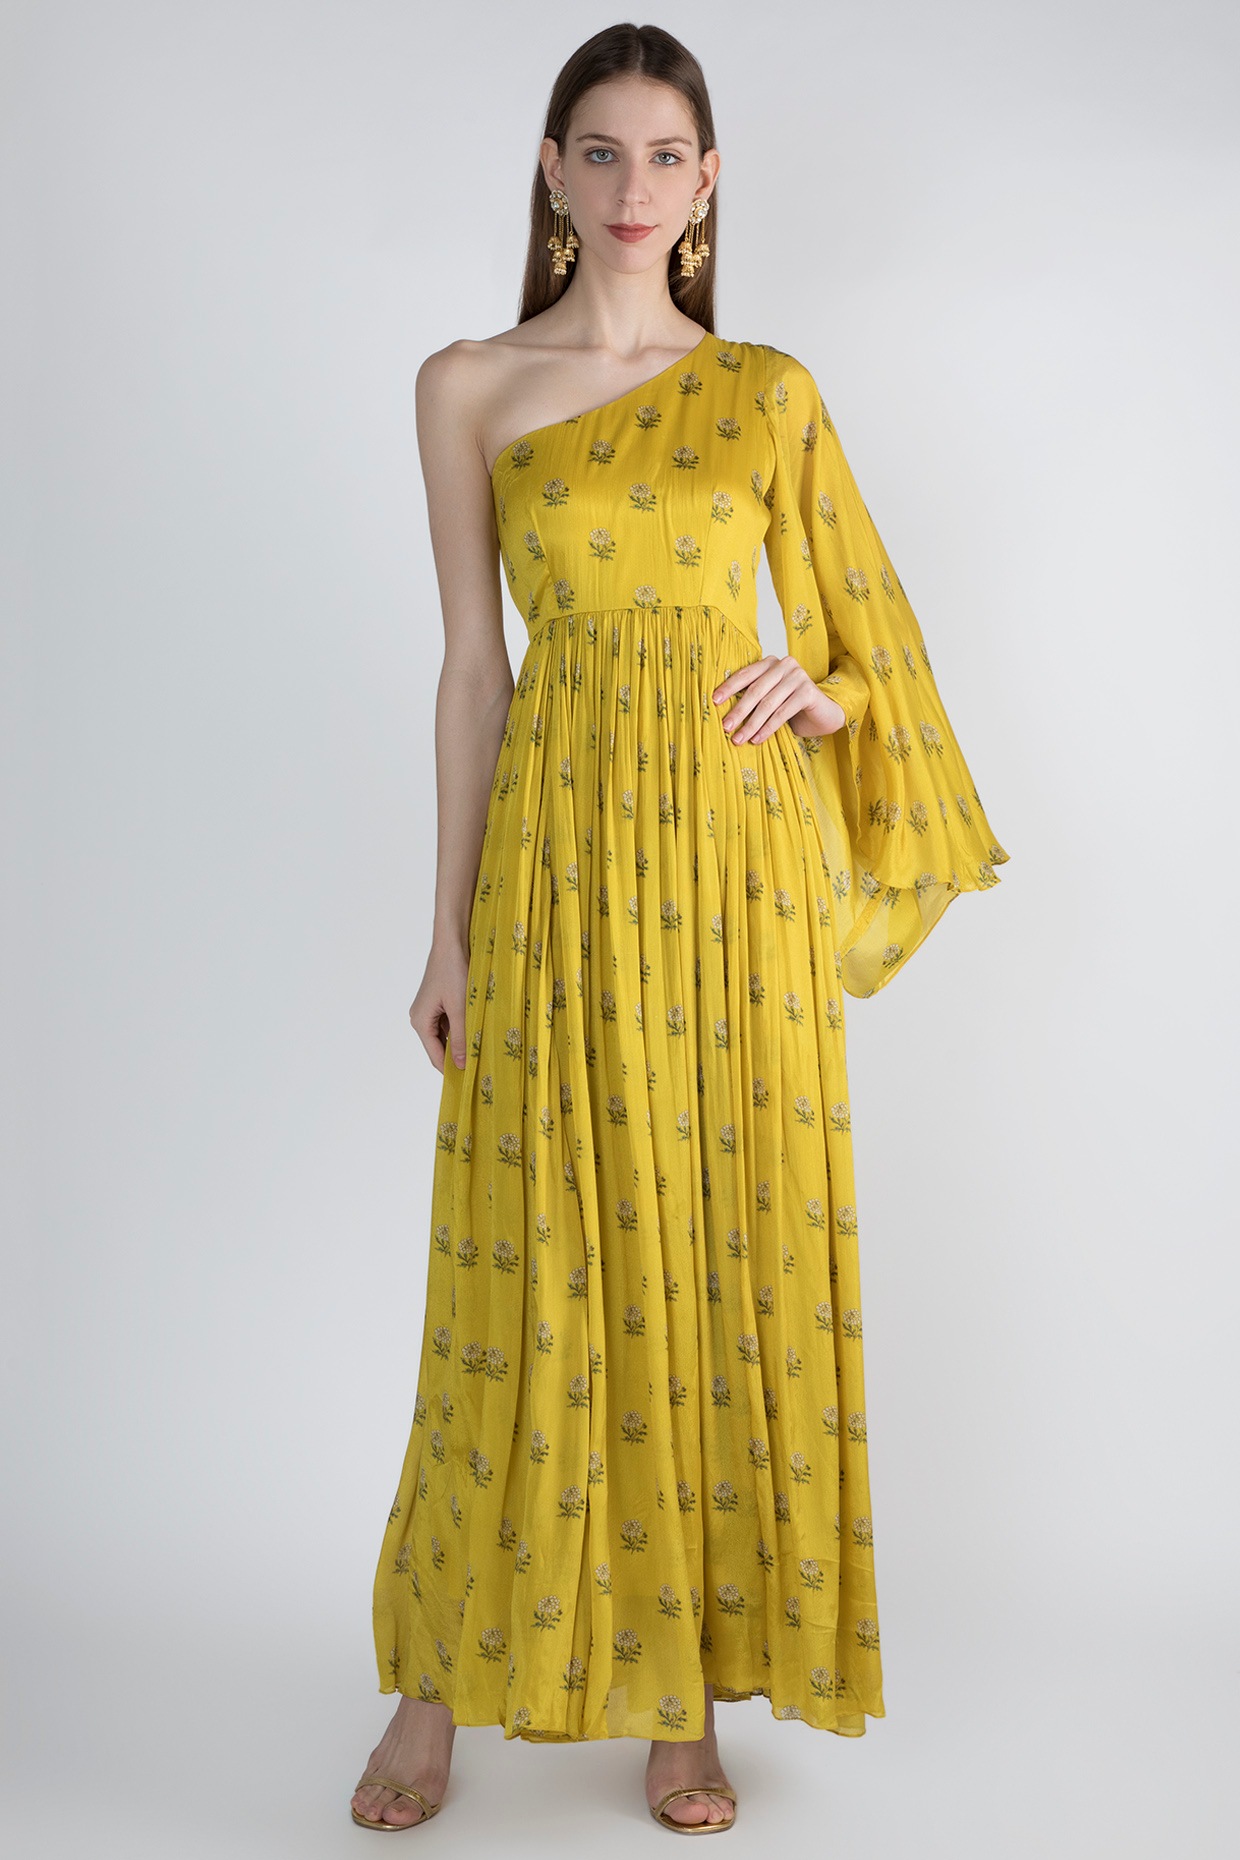 mustard yellow off shoulder dress